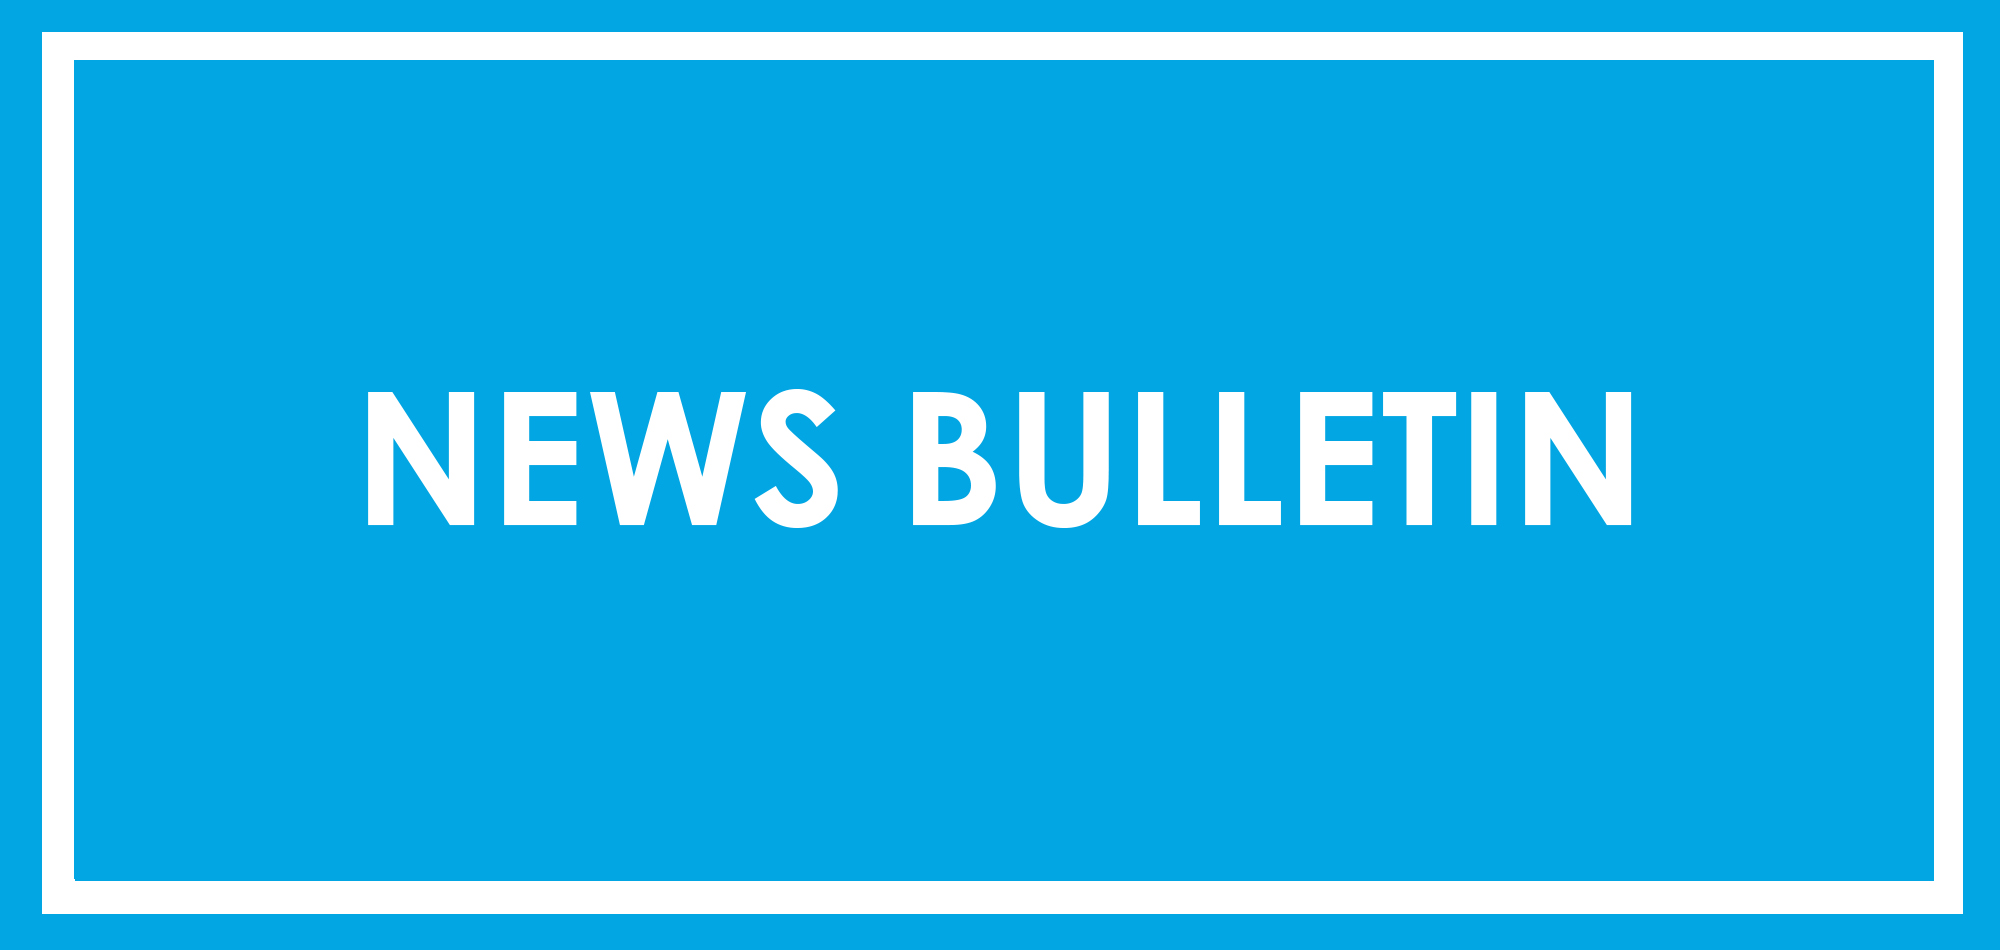 News Bulletin - 29.07.21